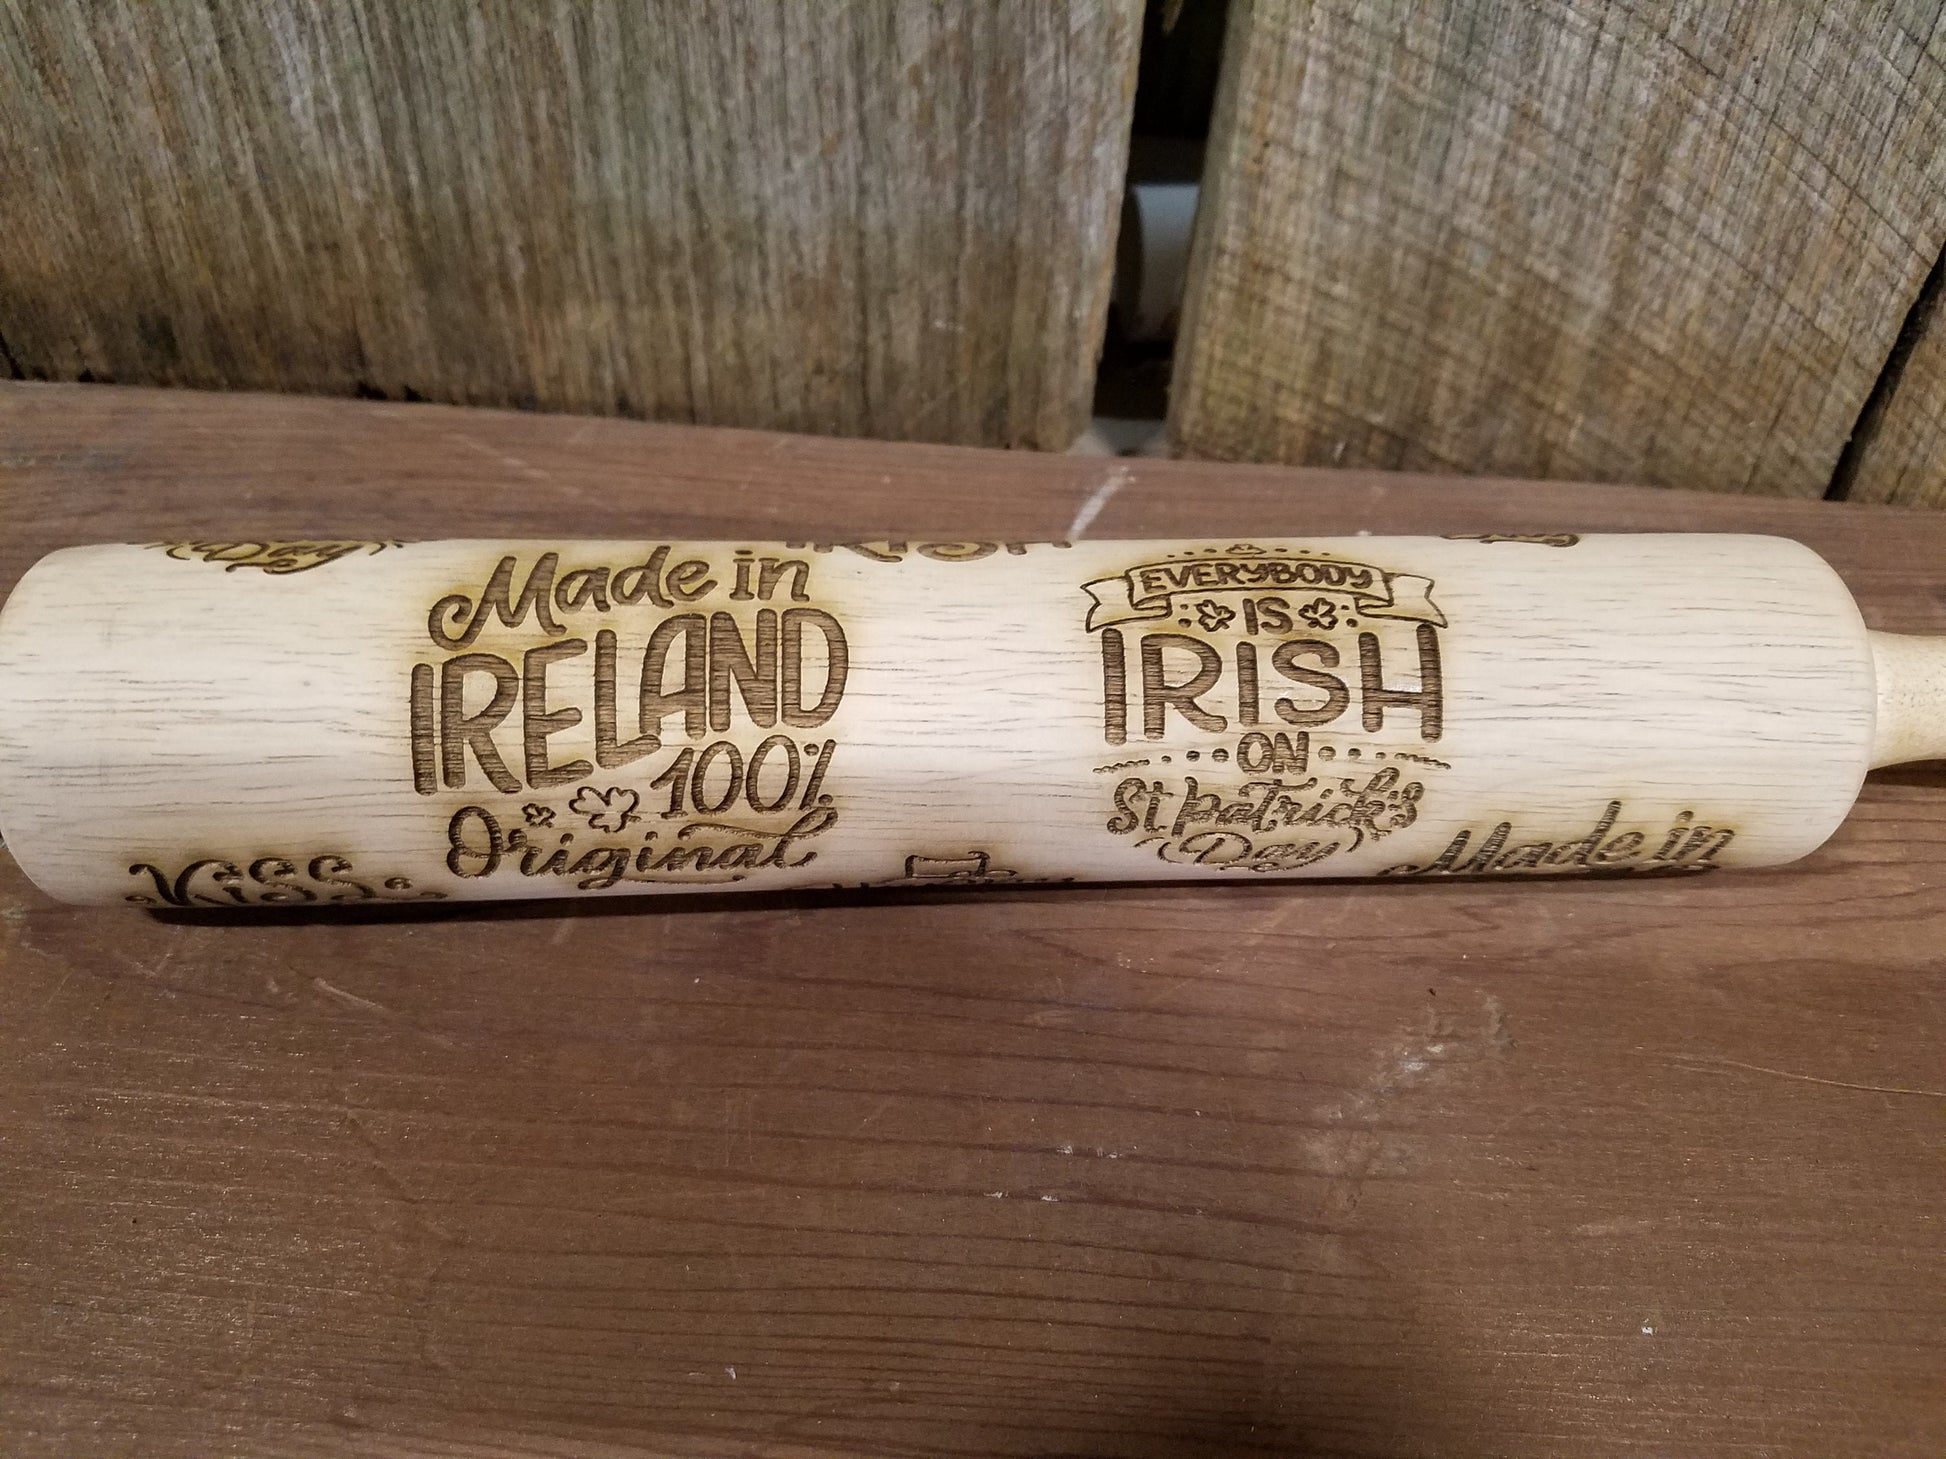 Irish, St Patricks Day, St Pattys Day, Kiss me Im Irish, Made in Ireland, Texture, 10 Inch Rolling Pin, Crust, Engraved, Wood, pottery